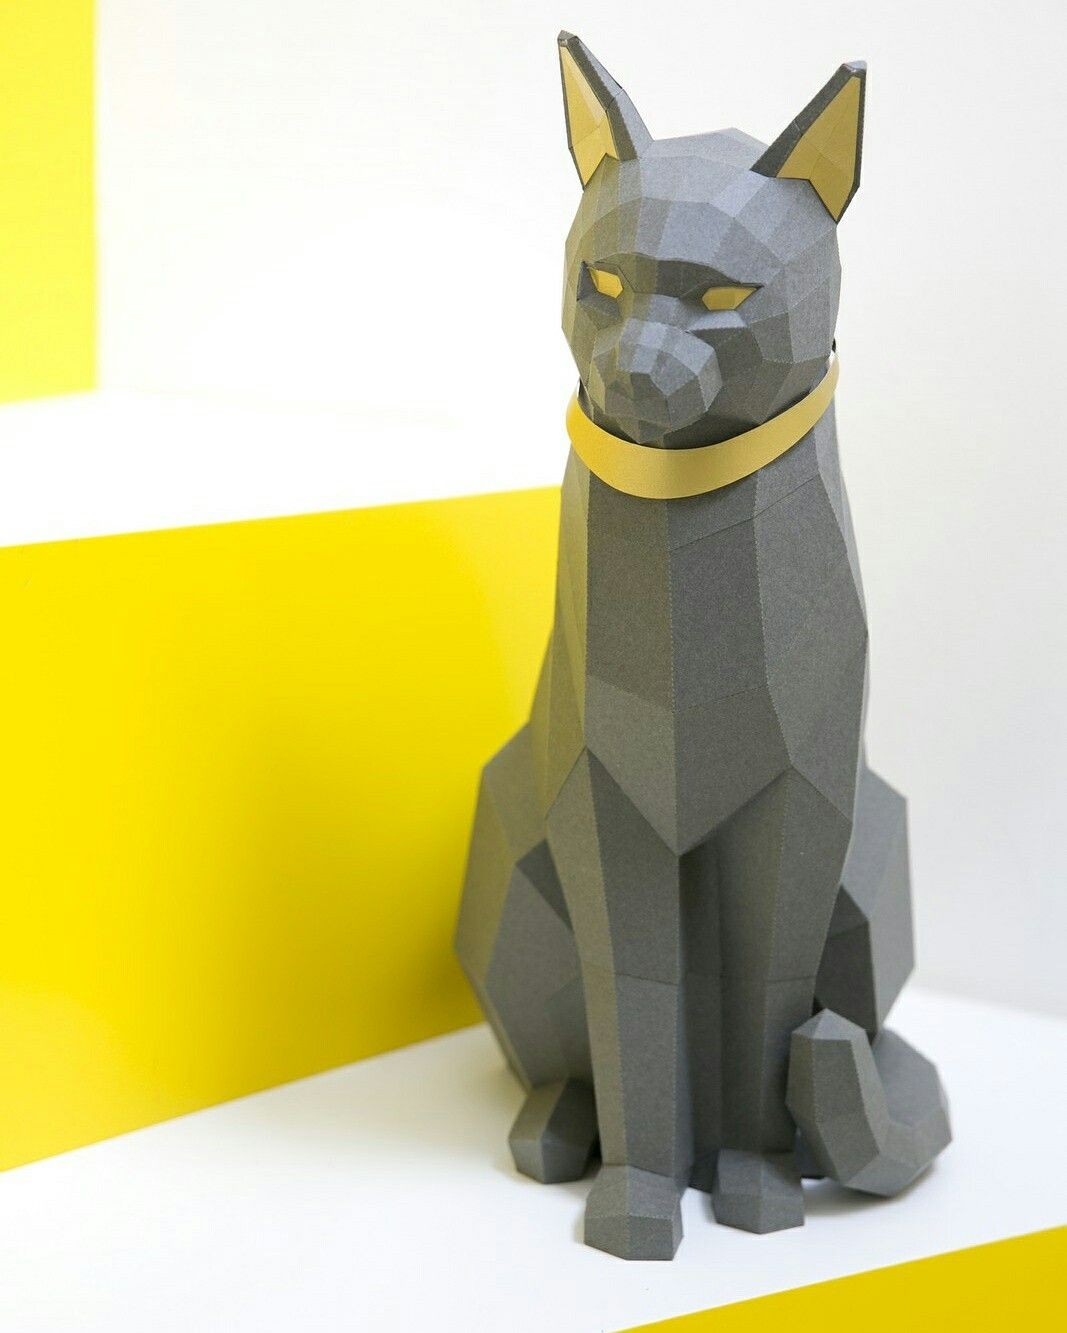 Cat Papercraft Black Cat Papercraft Kit Premium Version with Gold Applications